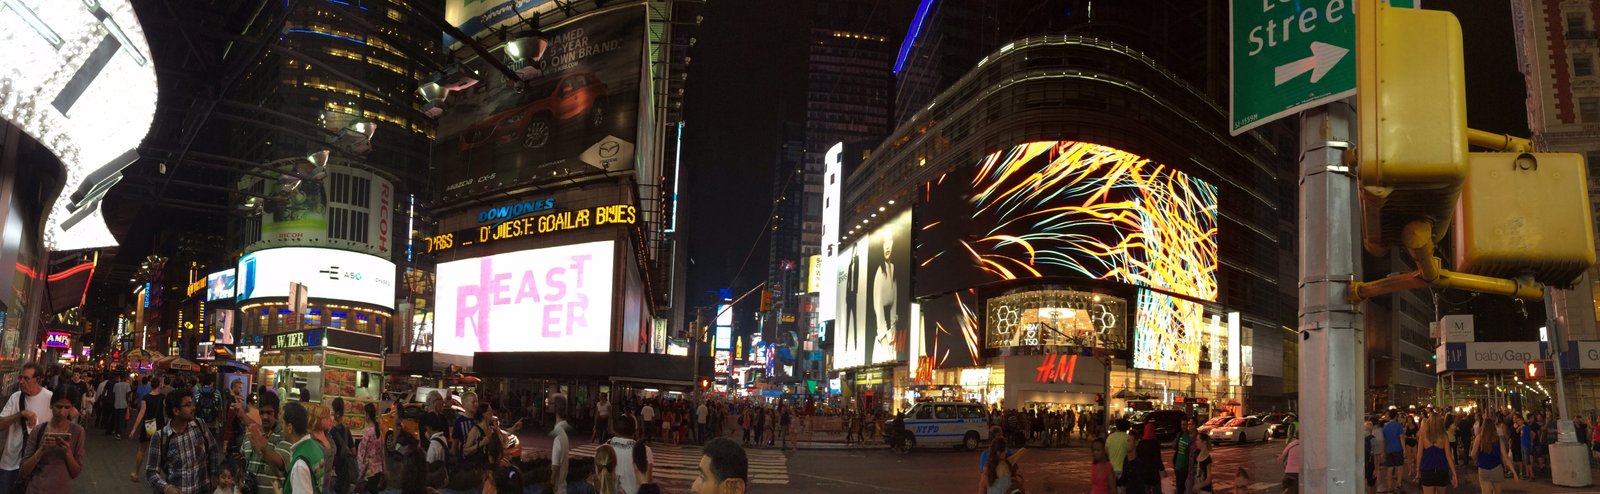 Times Square Pano 1